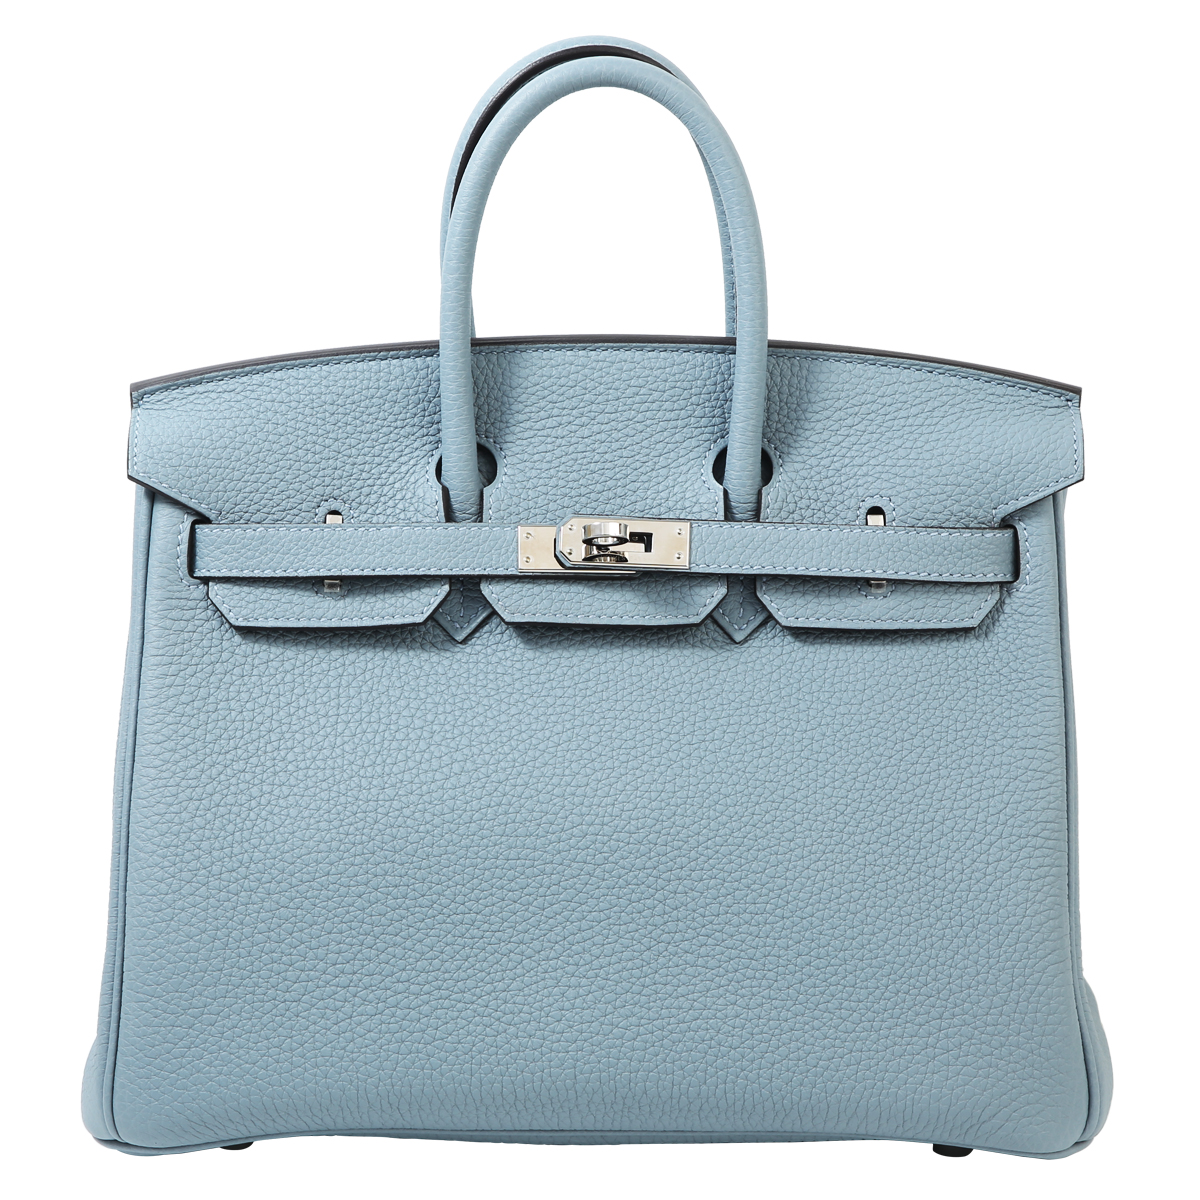 Look: Marian Rivera Buys New Hermes Birkin Bag Worth P1.7 Million